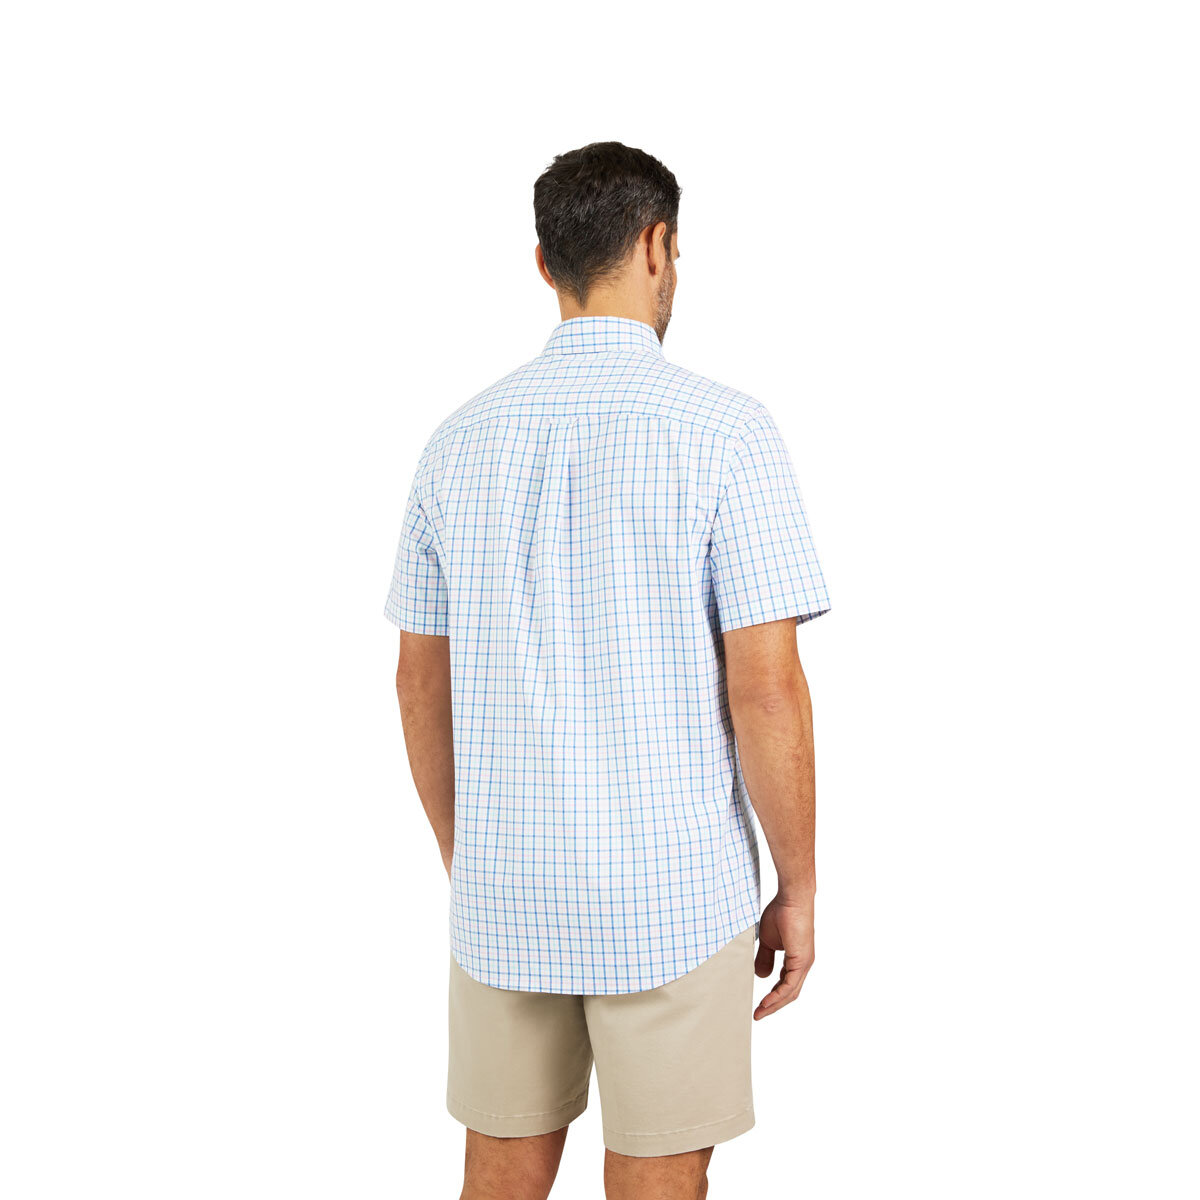 Chaps Men’s Easy Care Short Sleeve Woven Shirt in White